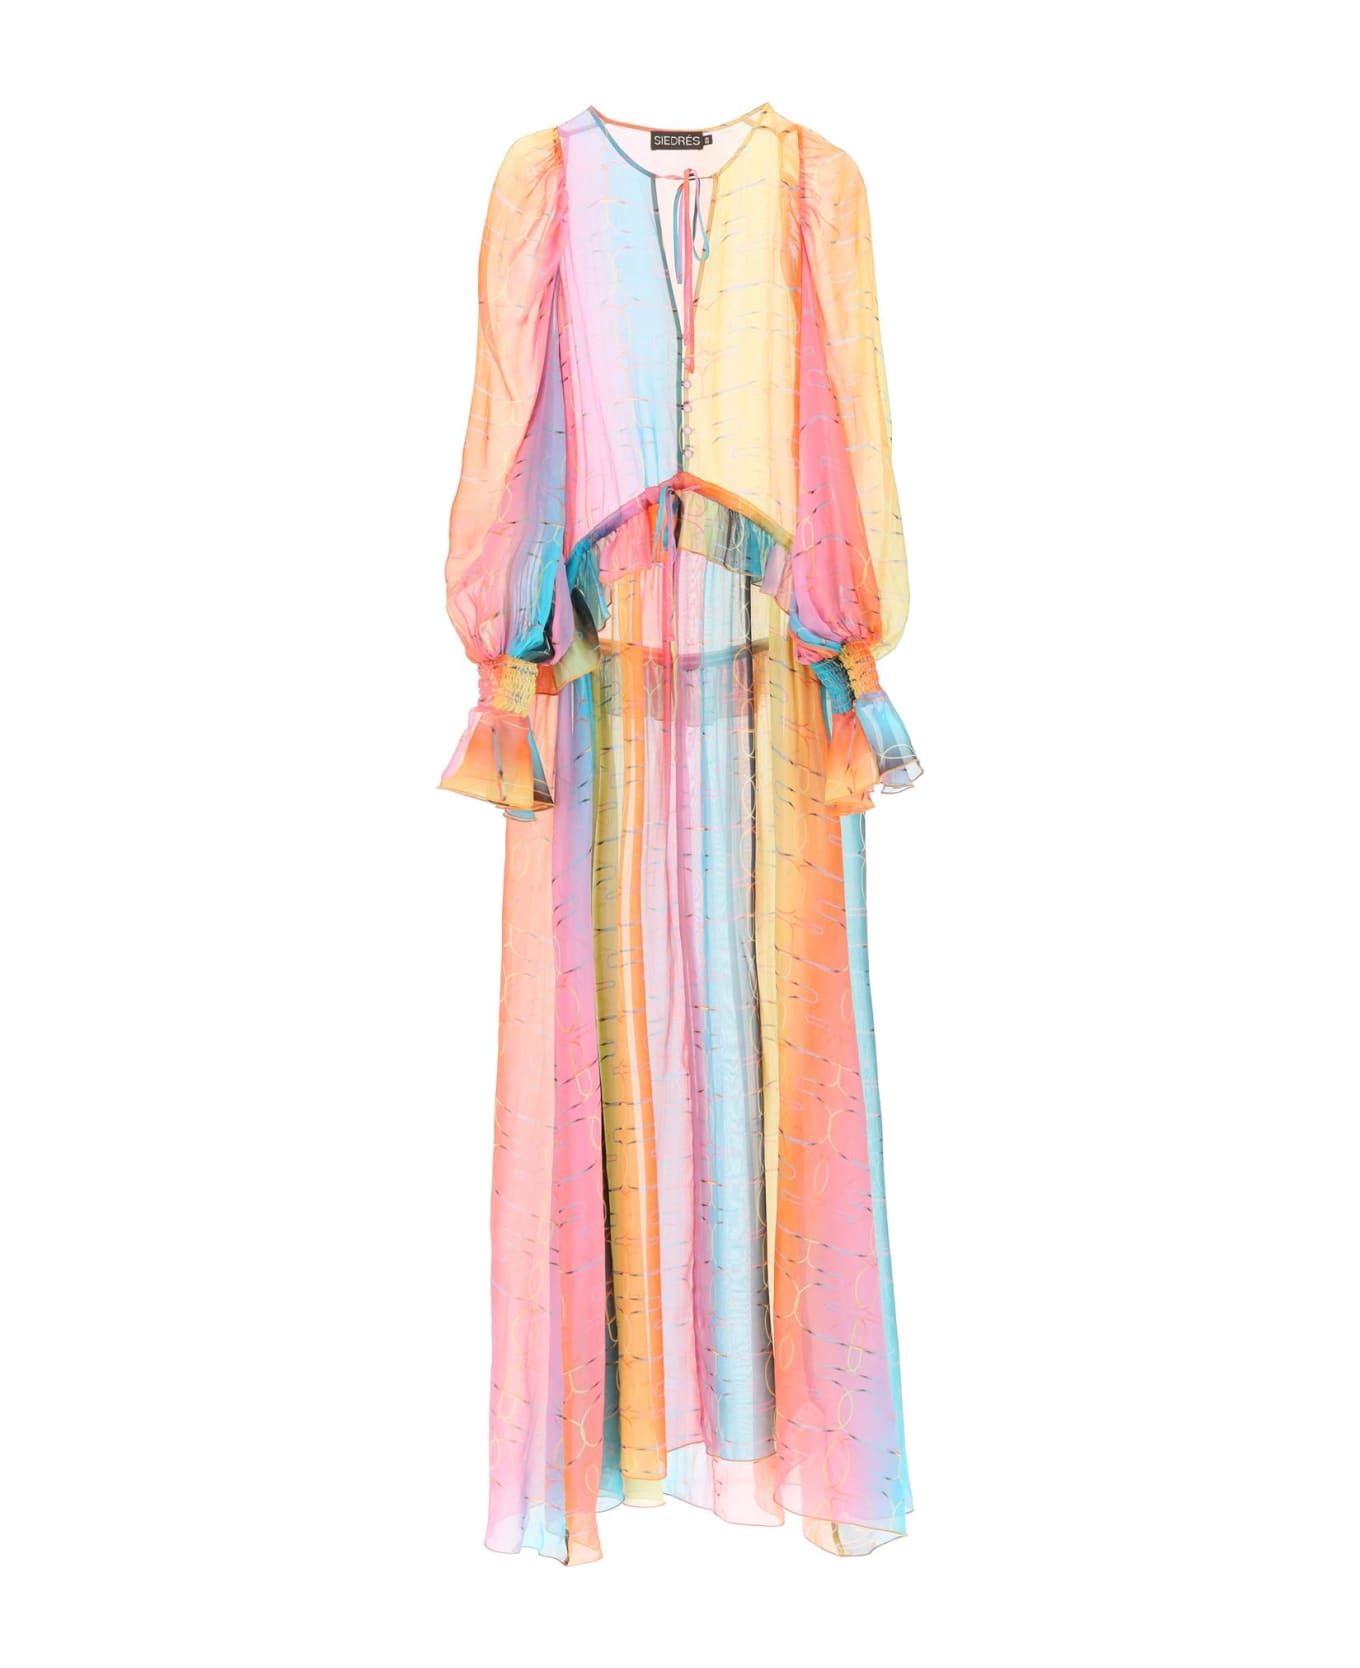 SIEDRES 'alora' Long Silk Chiffon Dress - MULTI